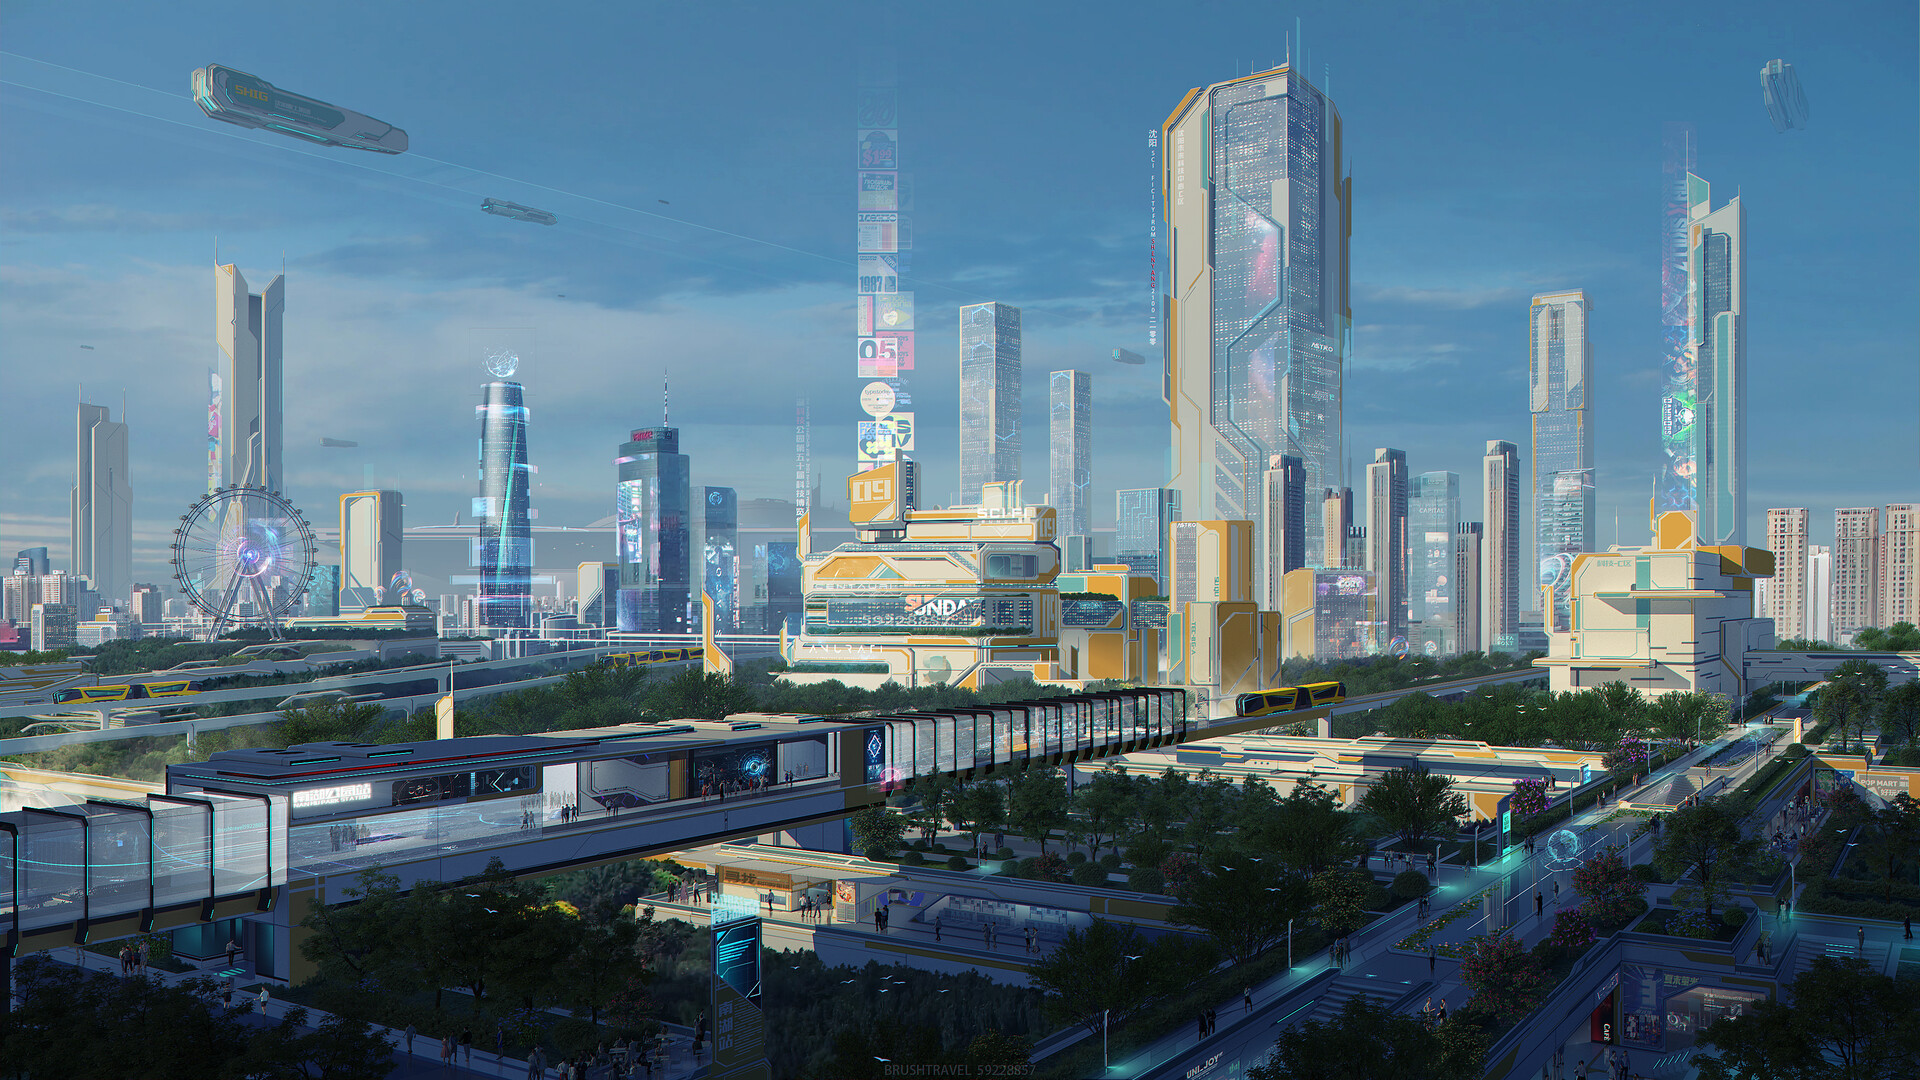 ArtStation - sci-fi city from china Shenyang